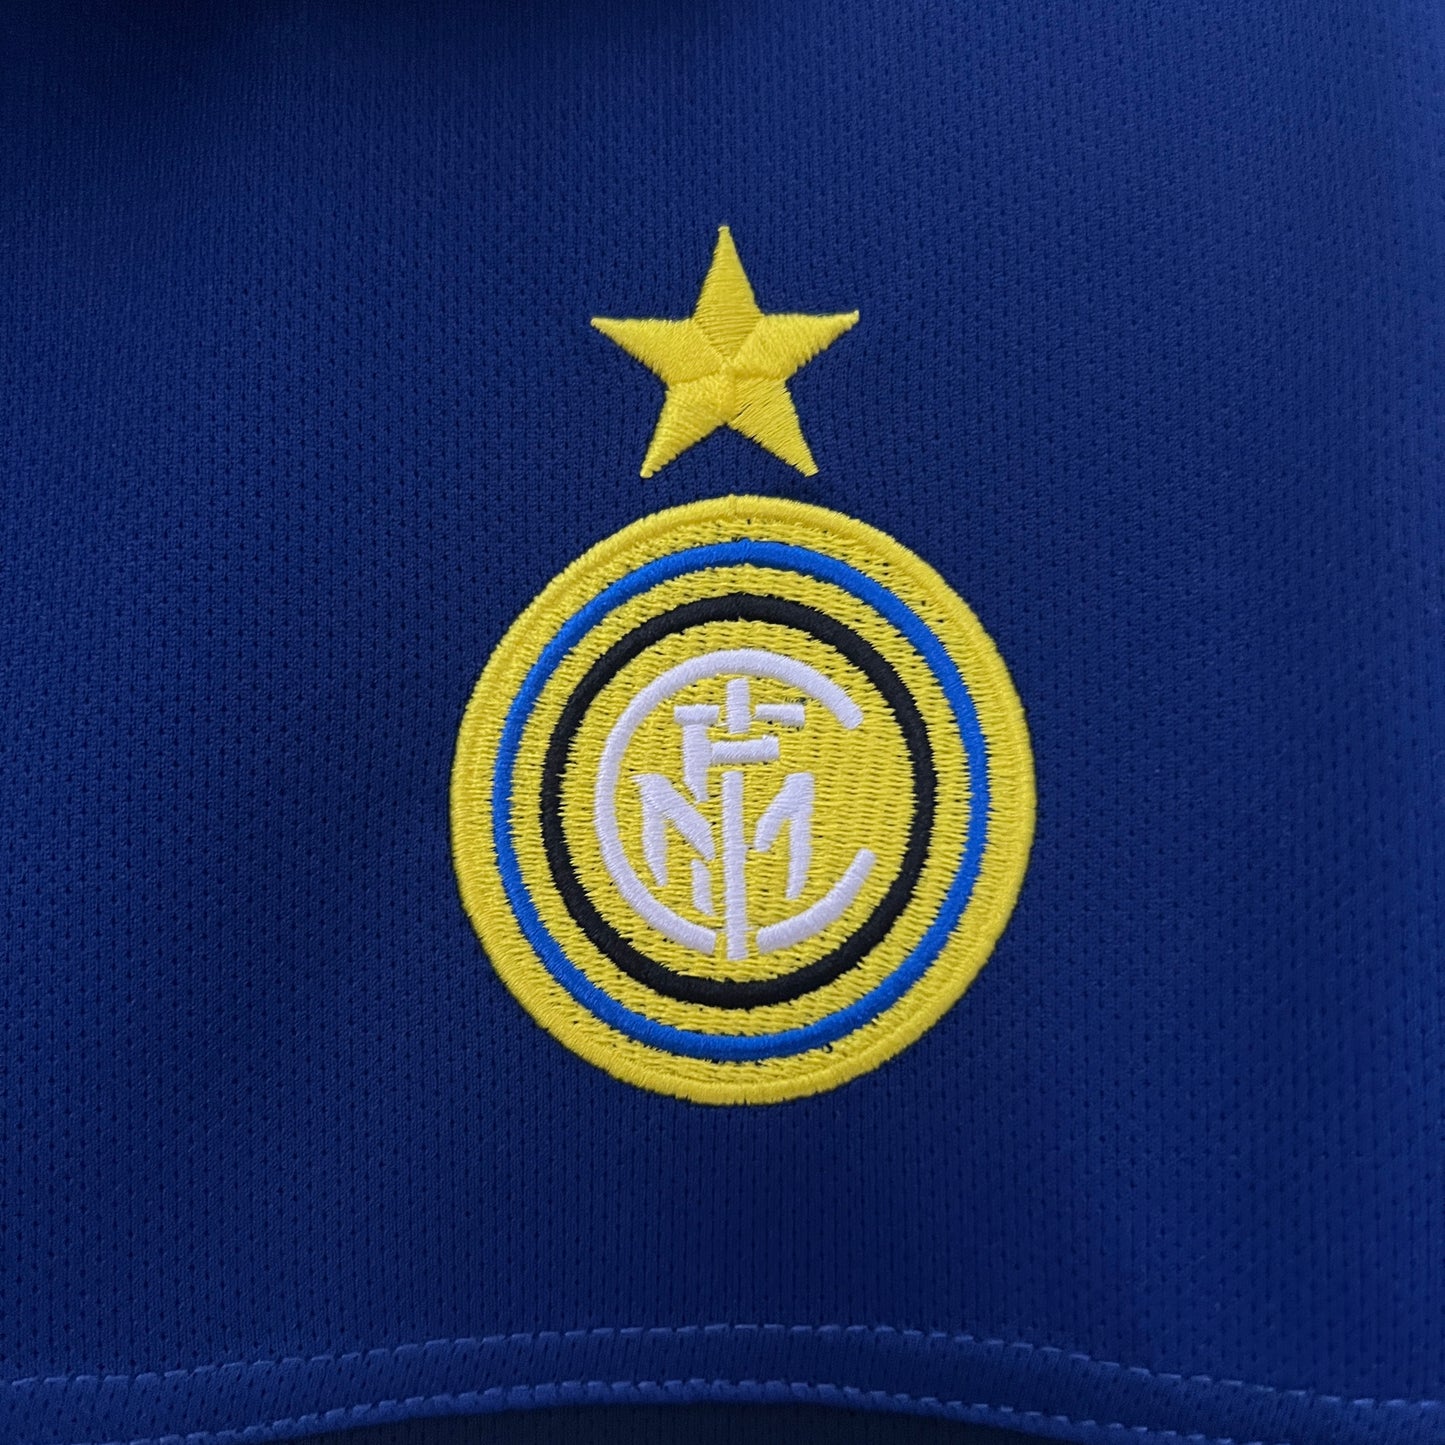 Camiseta Inter Milan 98/99 Tercera Visita | Retro